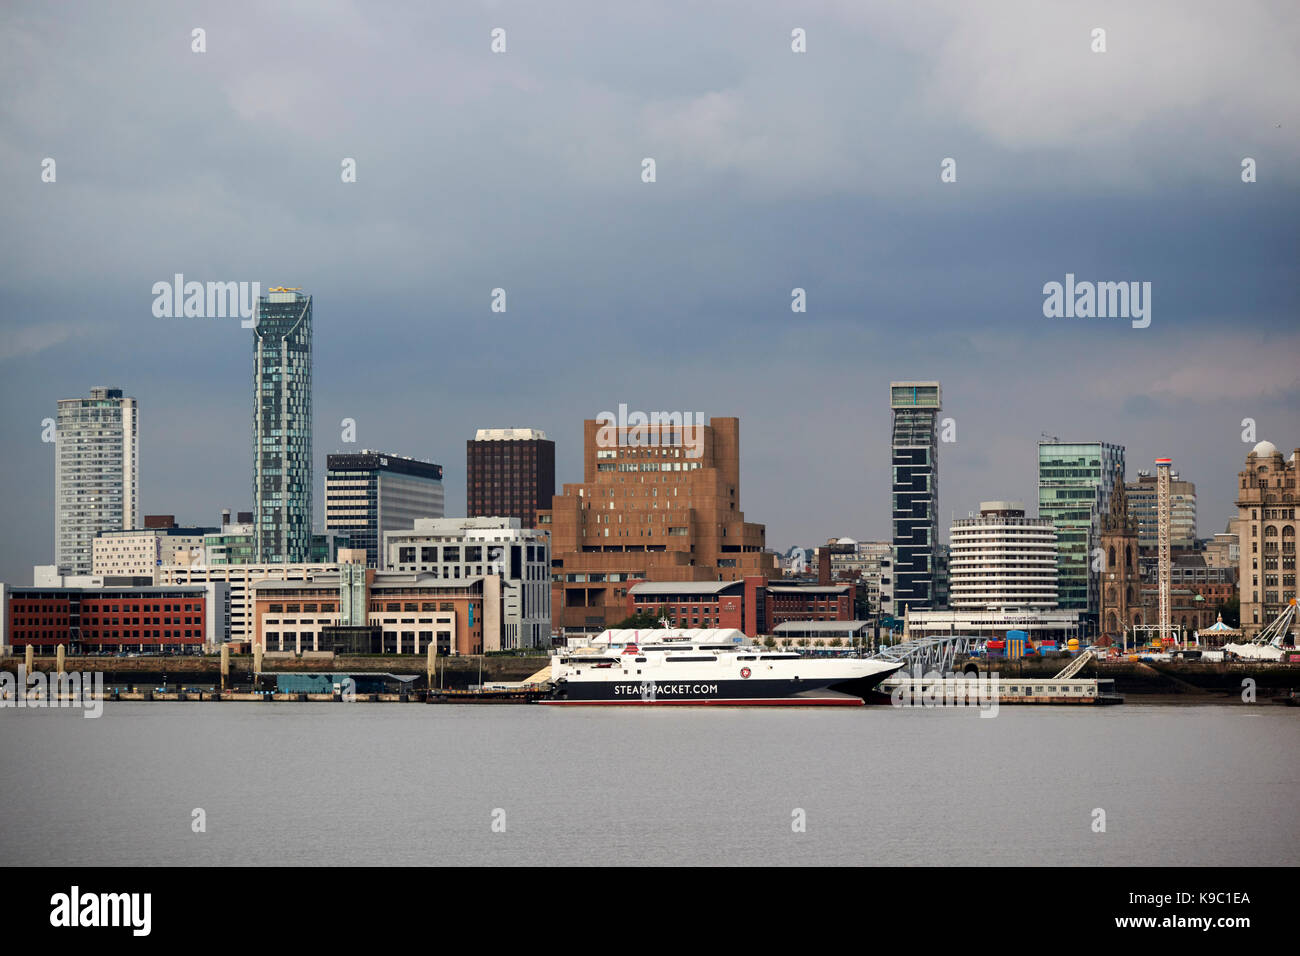 Dabinda et Liverpool pier head skyline Banque D'Images